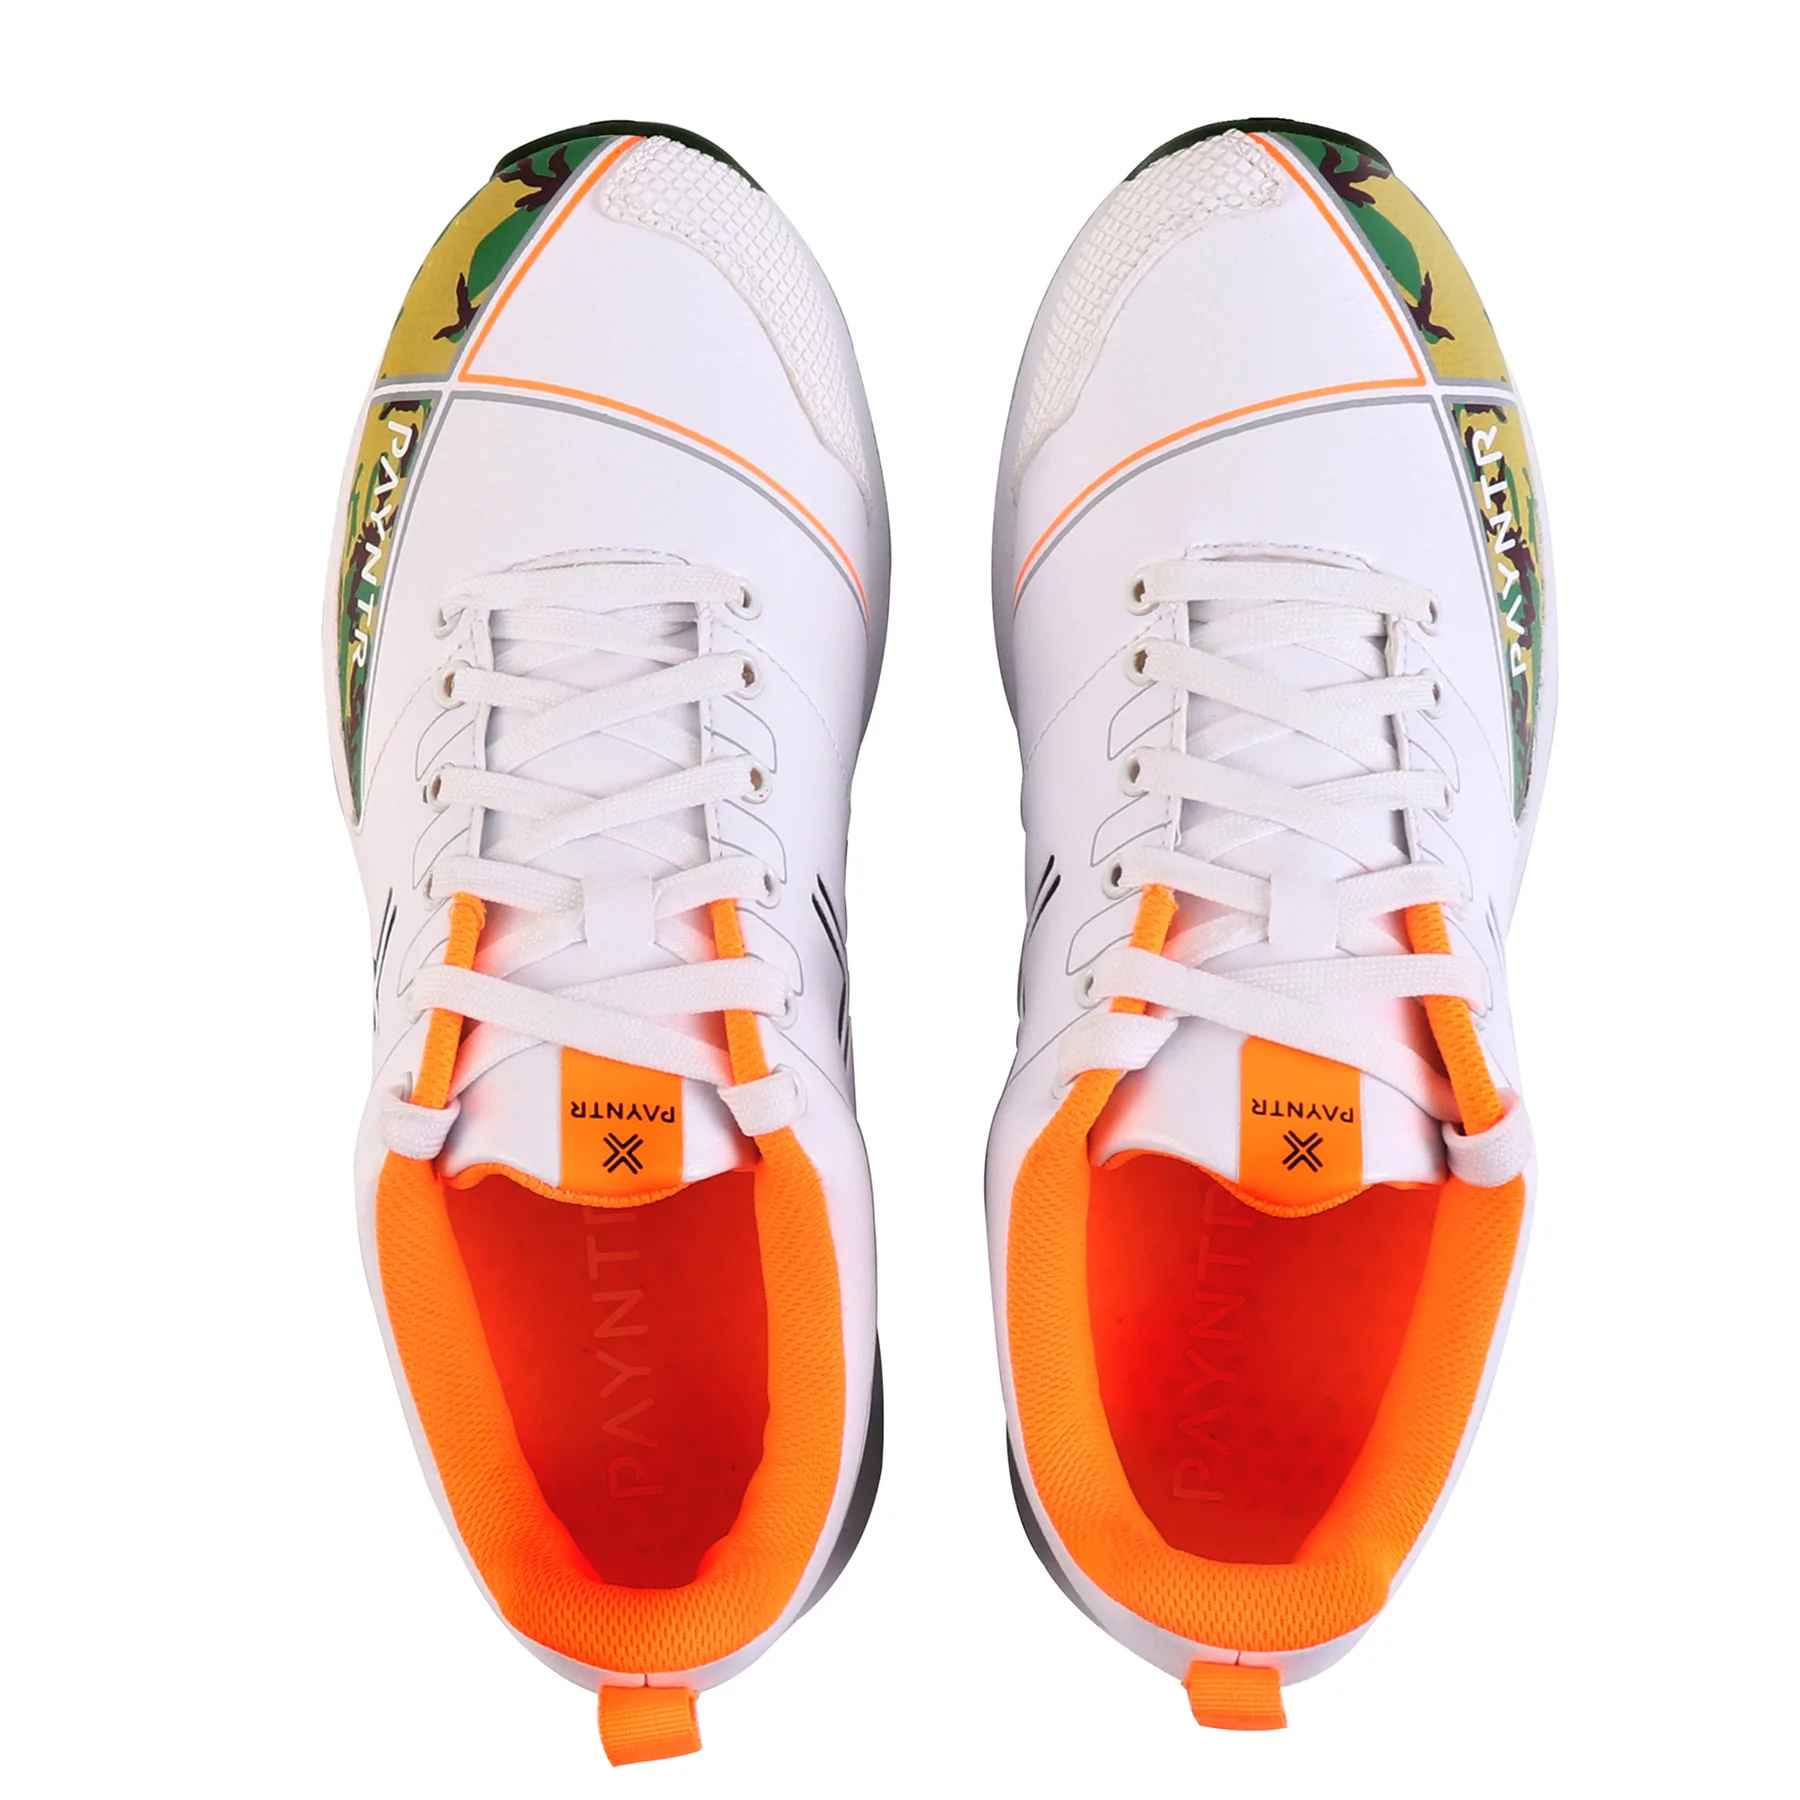 PAYNTR X RUBBER Cricket Shoes – Camo/Orange/Black